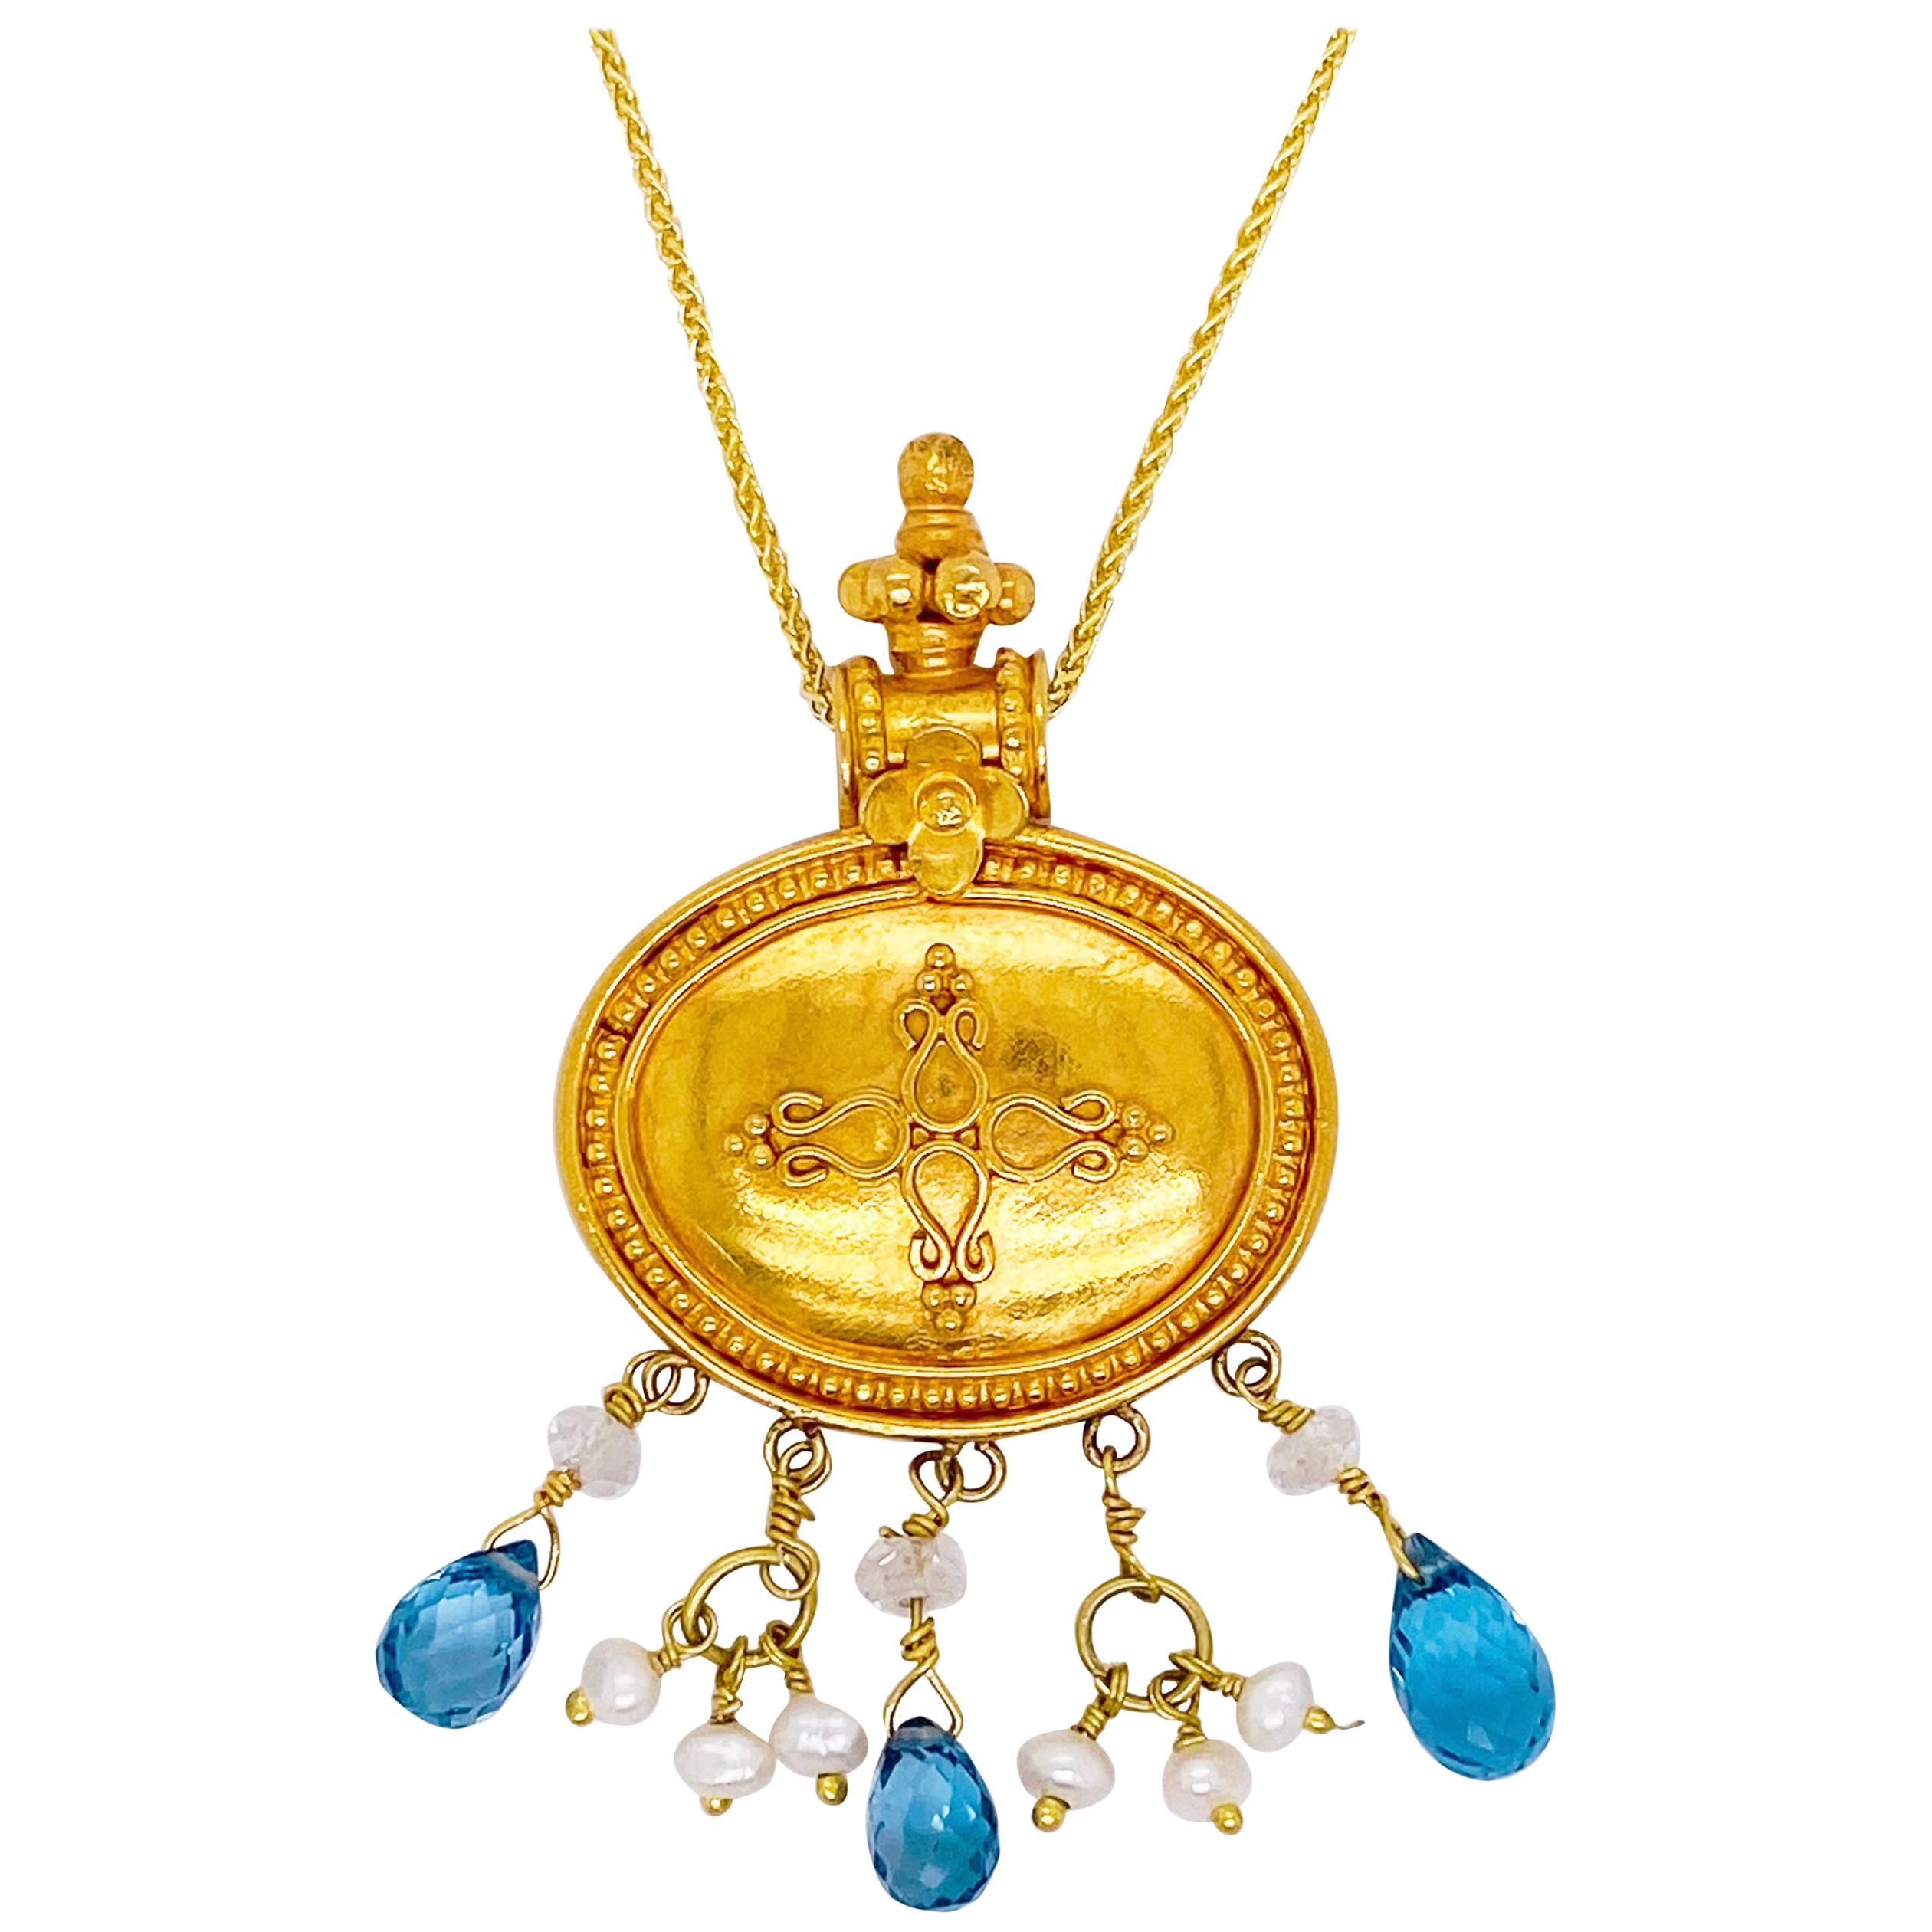 22k Gold Necklace Blue Topaz, Seed Pearls, Clear Quartz Pendant, Fancy Box Chain